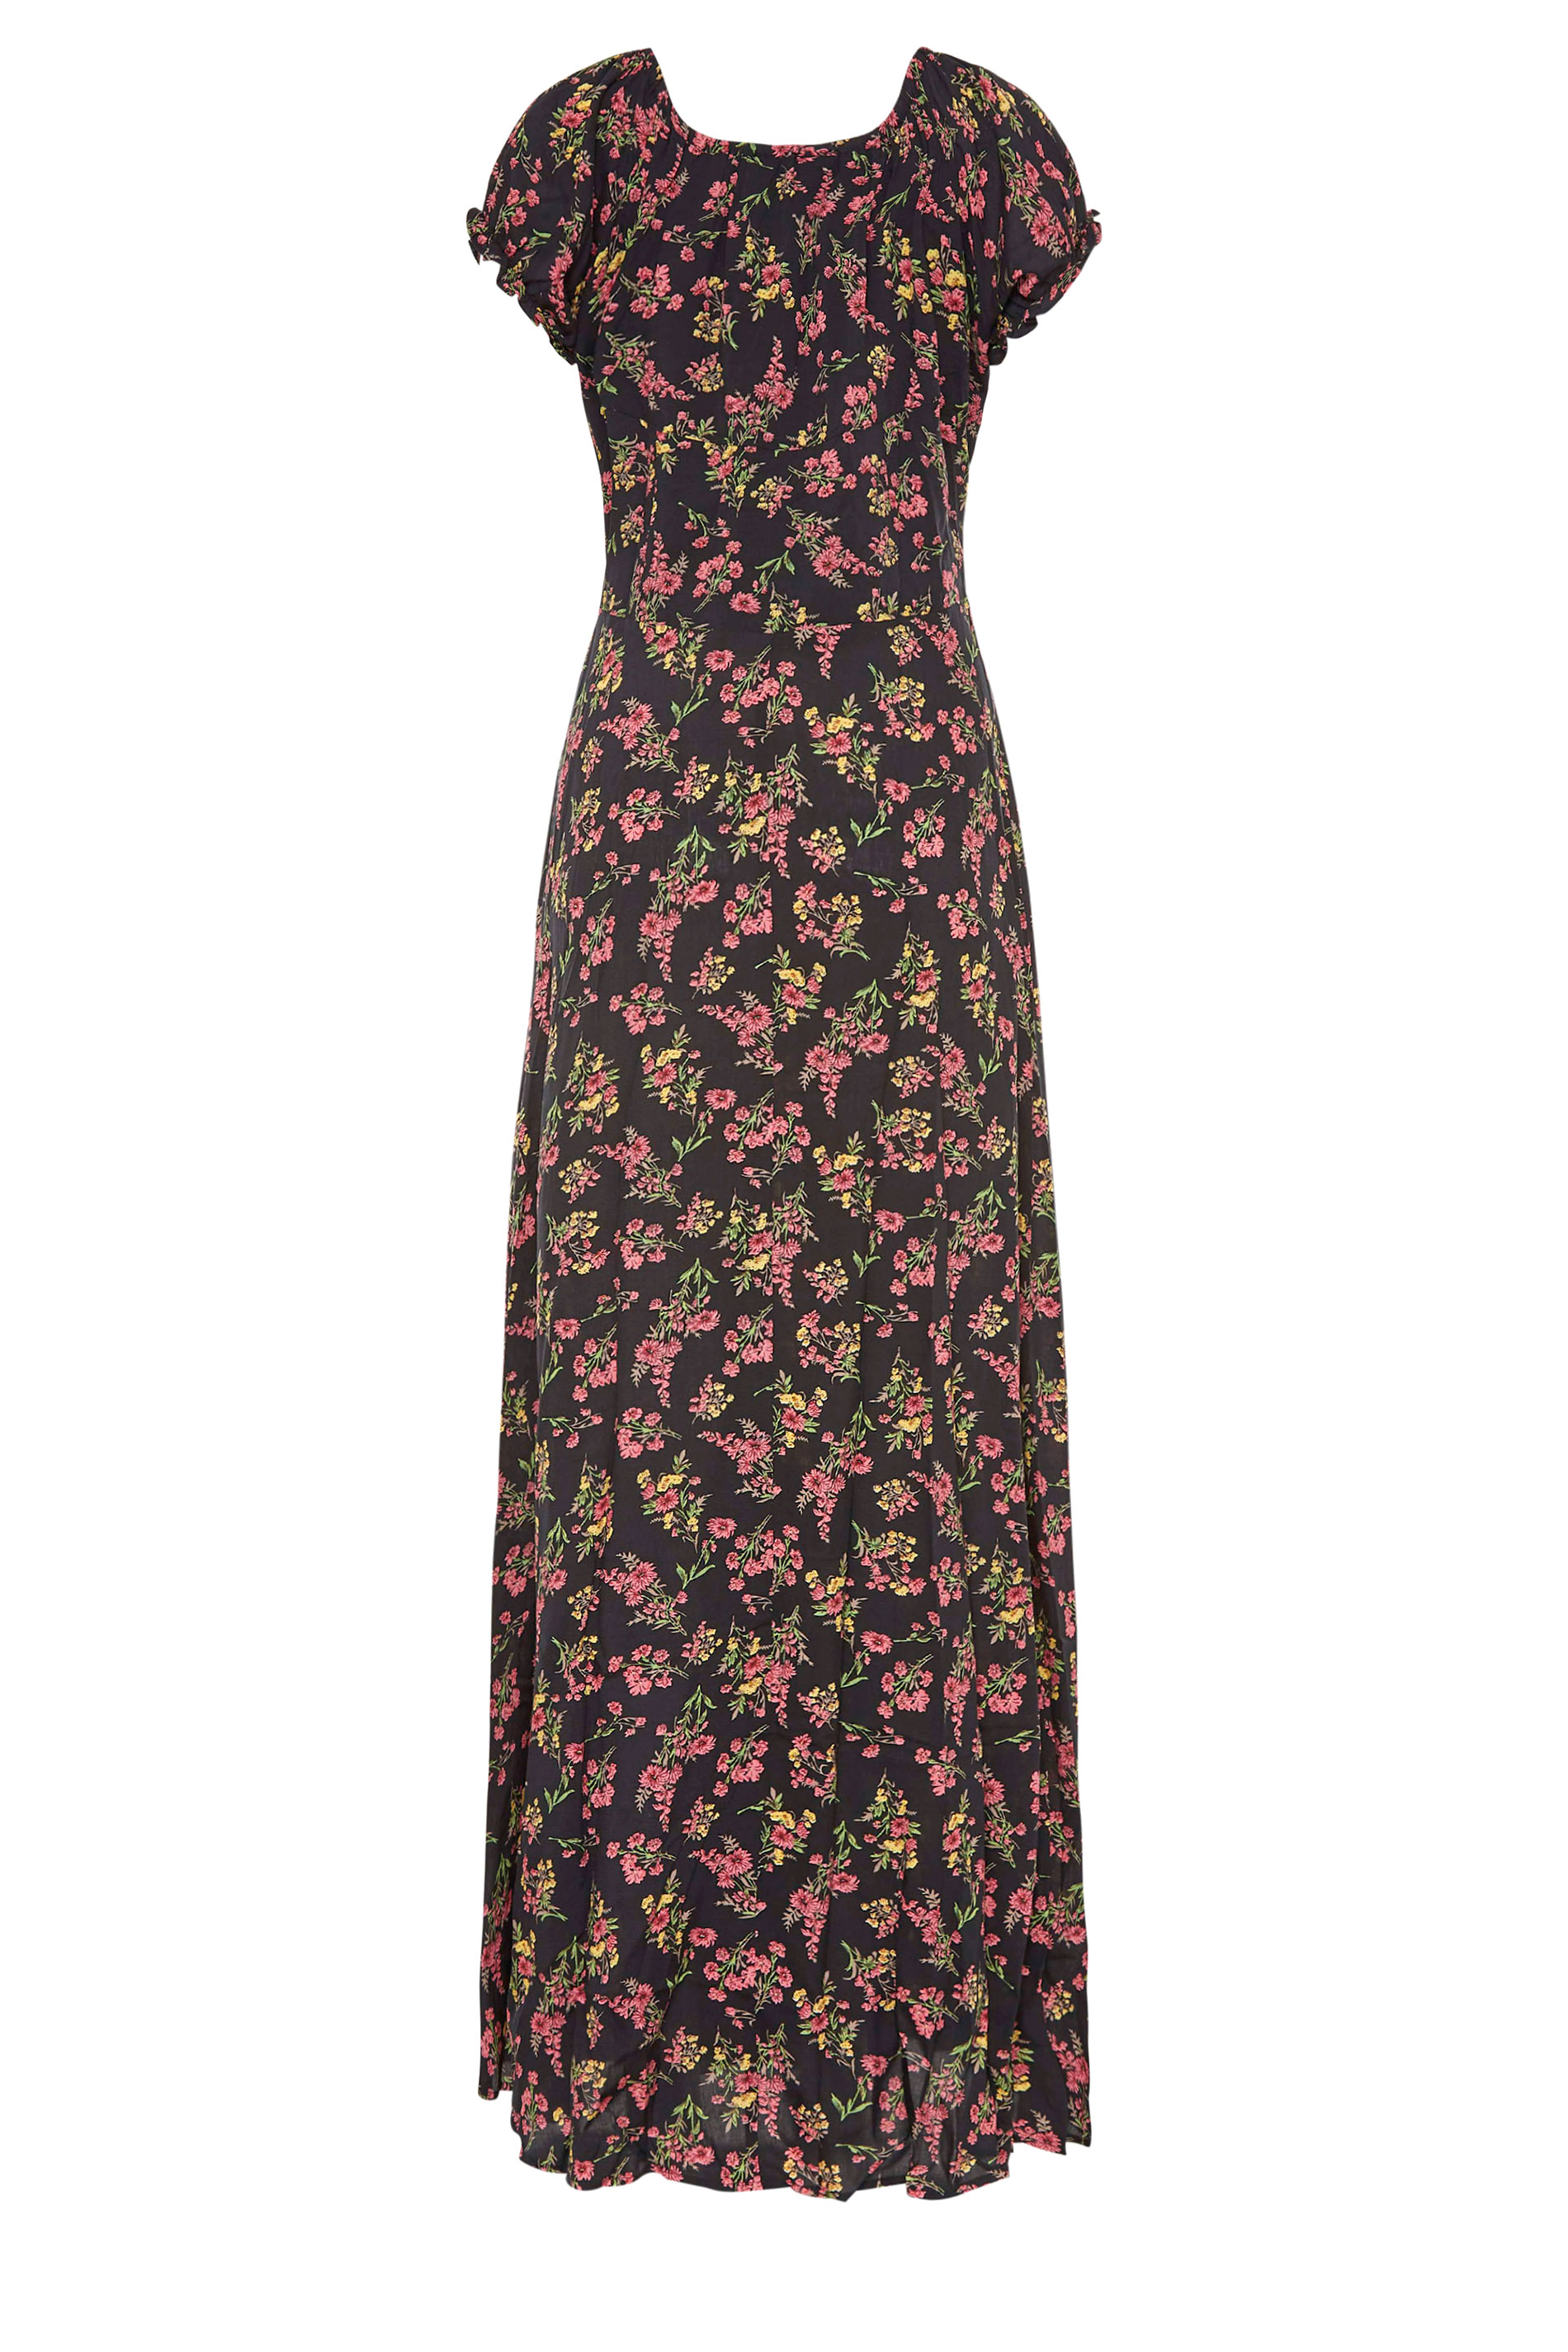 LTS Black Floral Puff Sleeve Corset Maxi Dress | Long Tall Sally